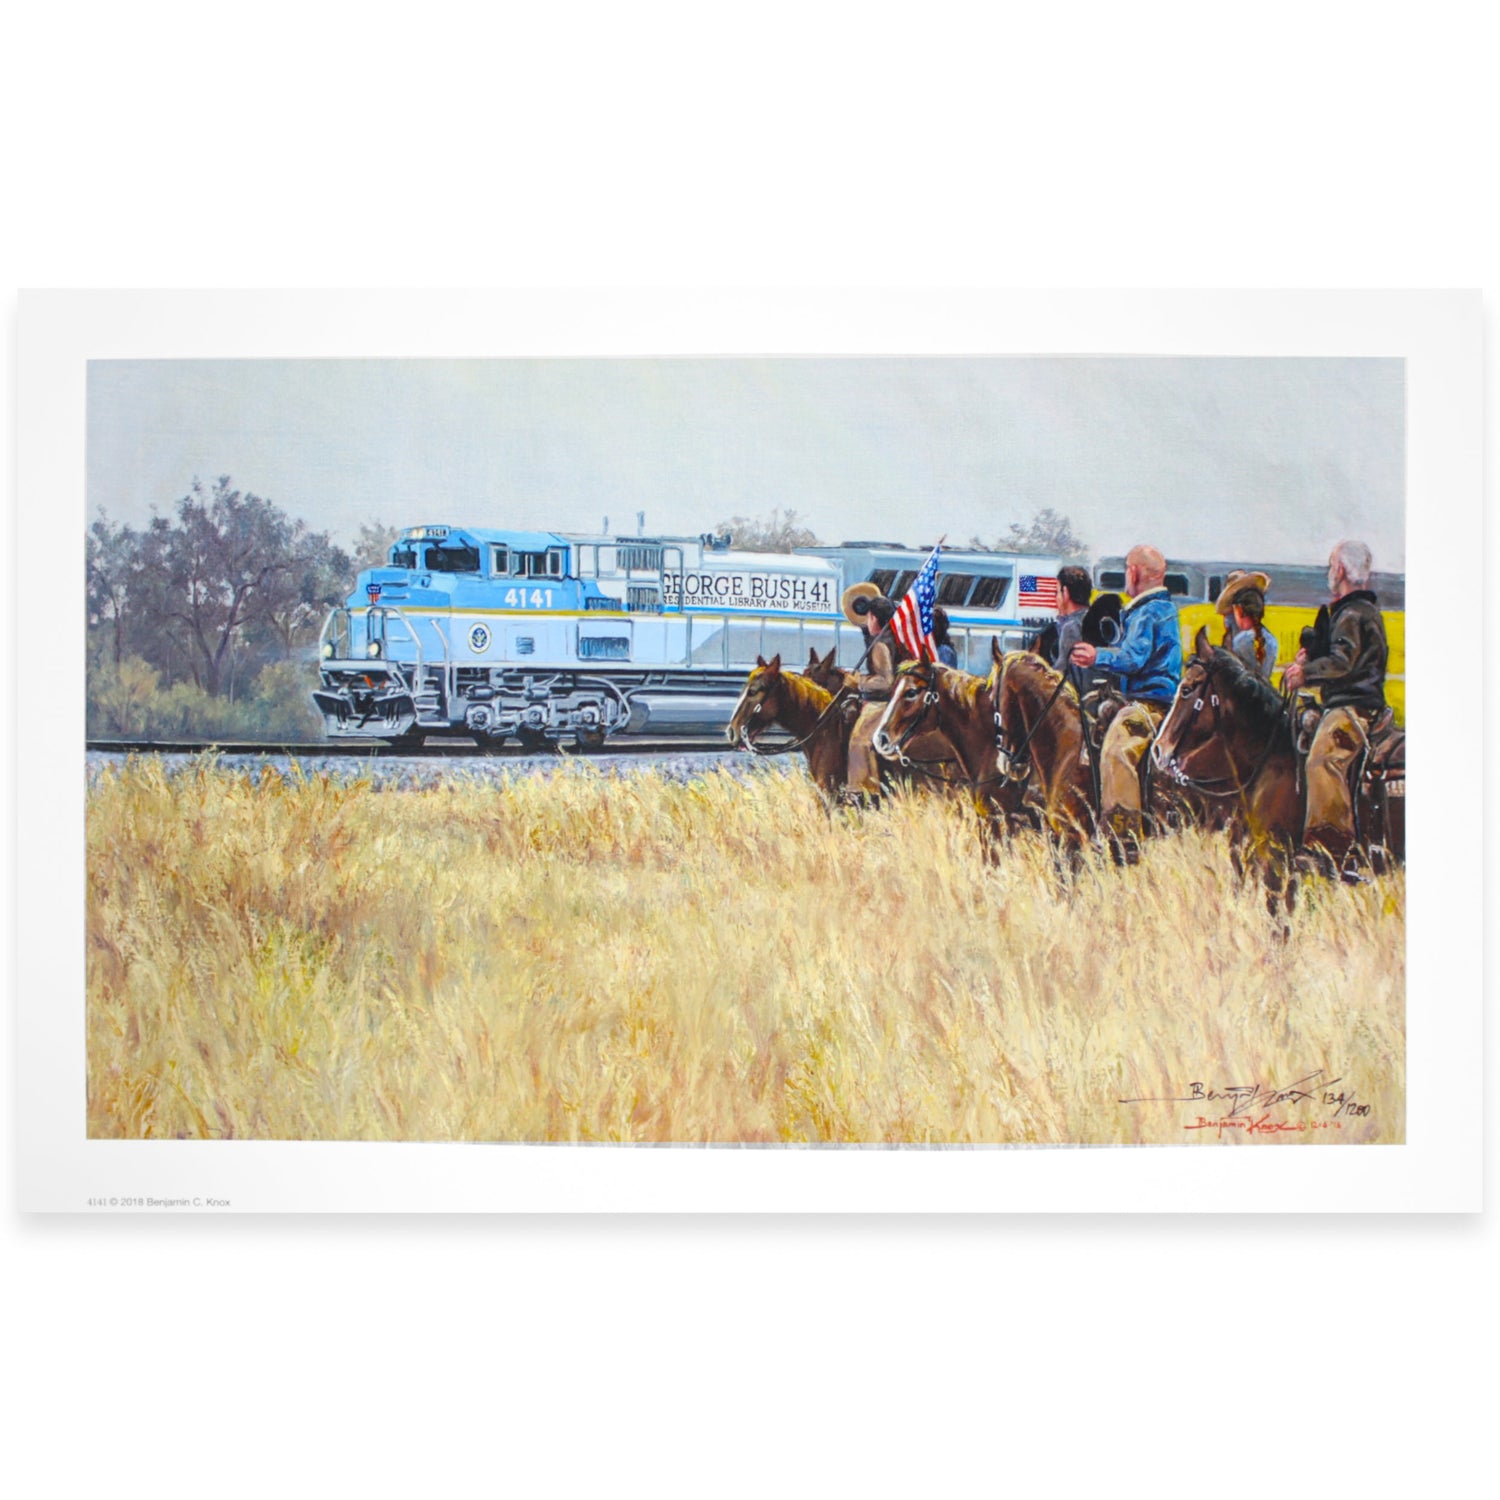 Benjamin Knox 4141 Train Limited Edition Large Print